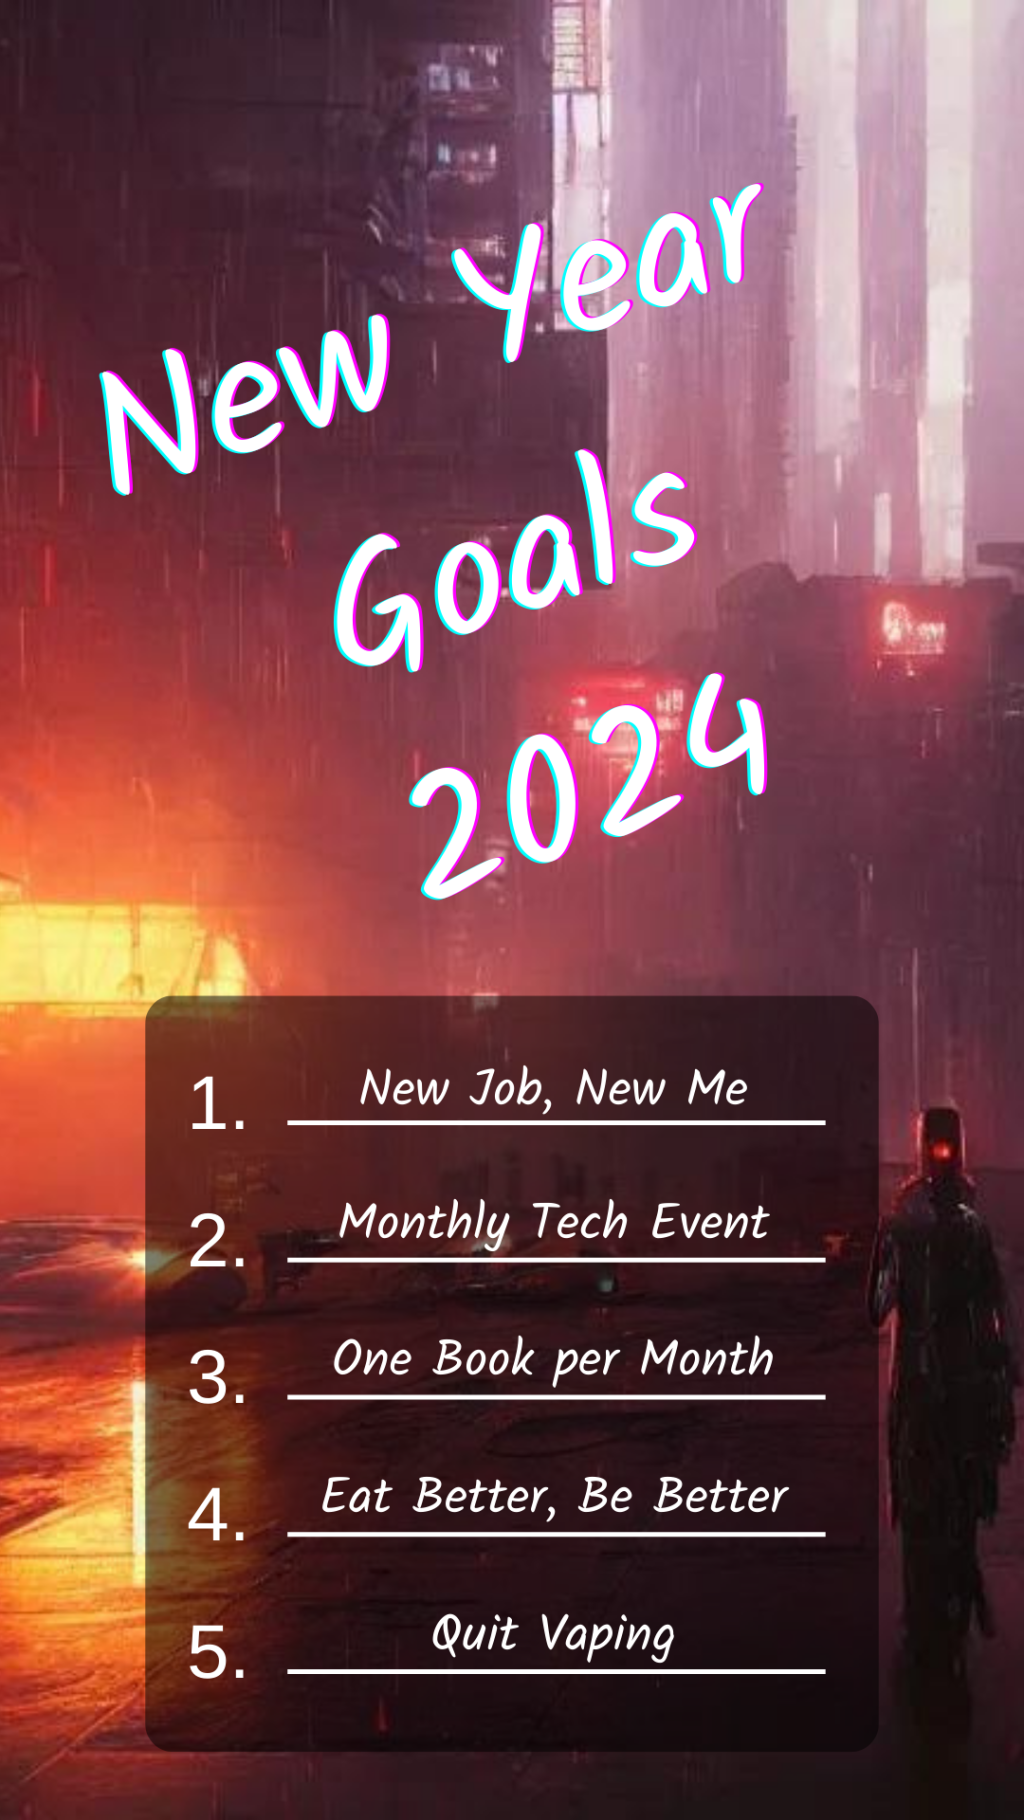 2024 Goals